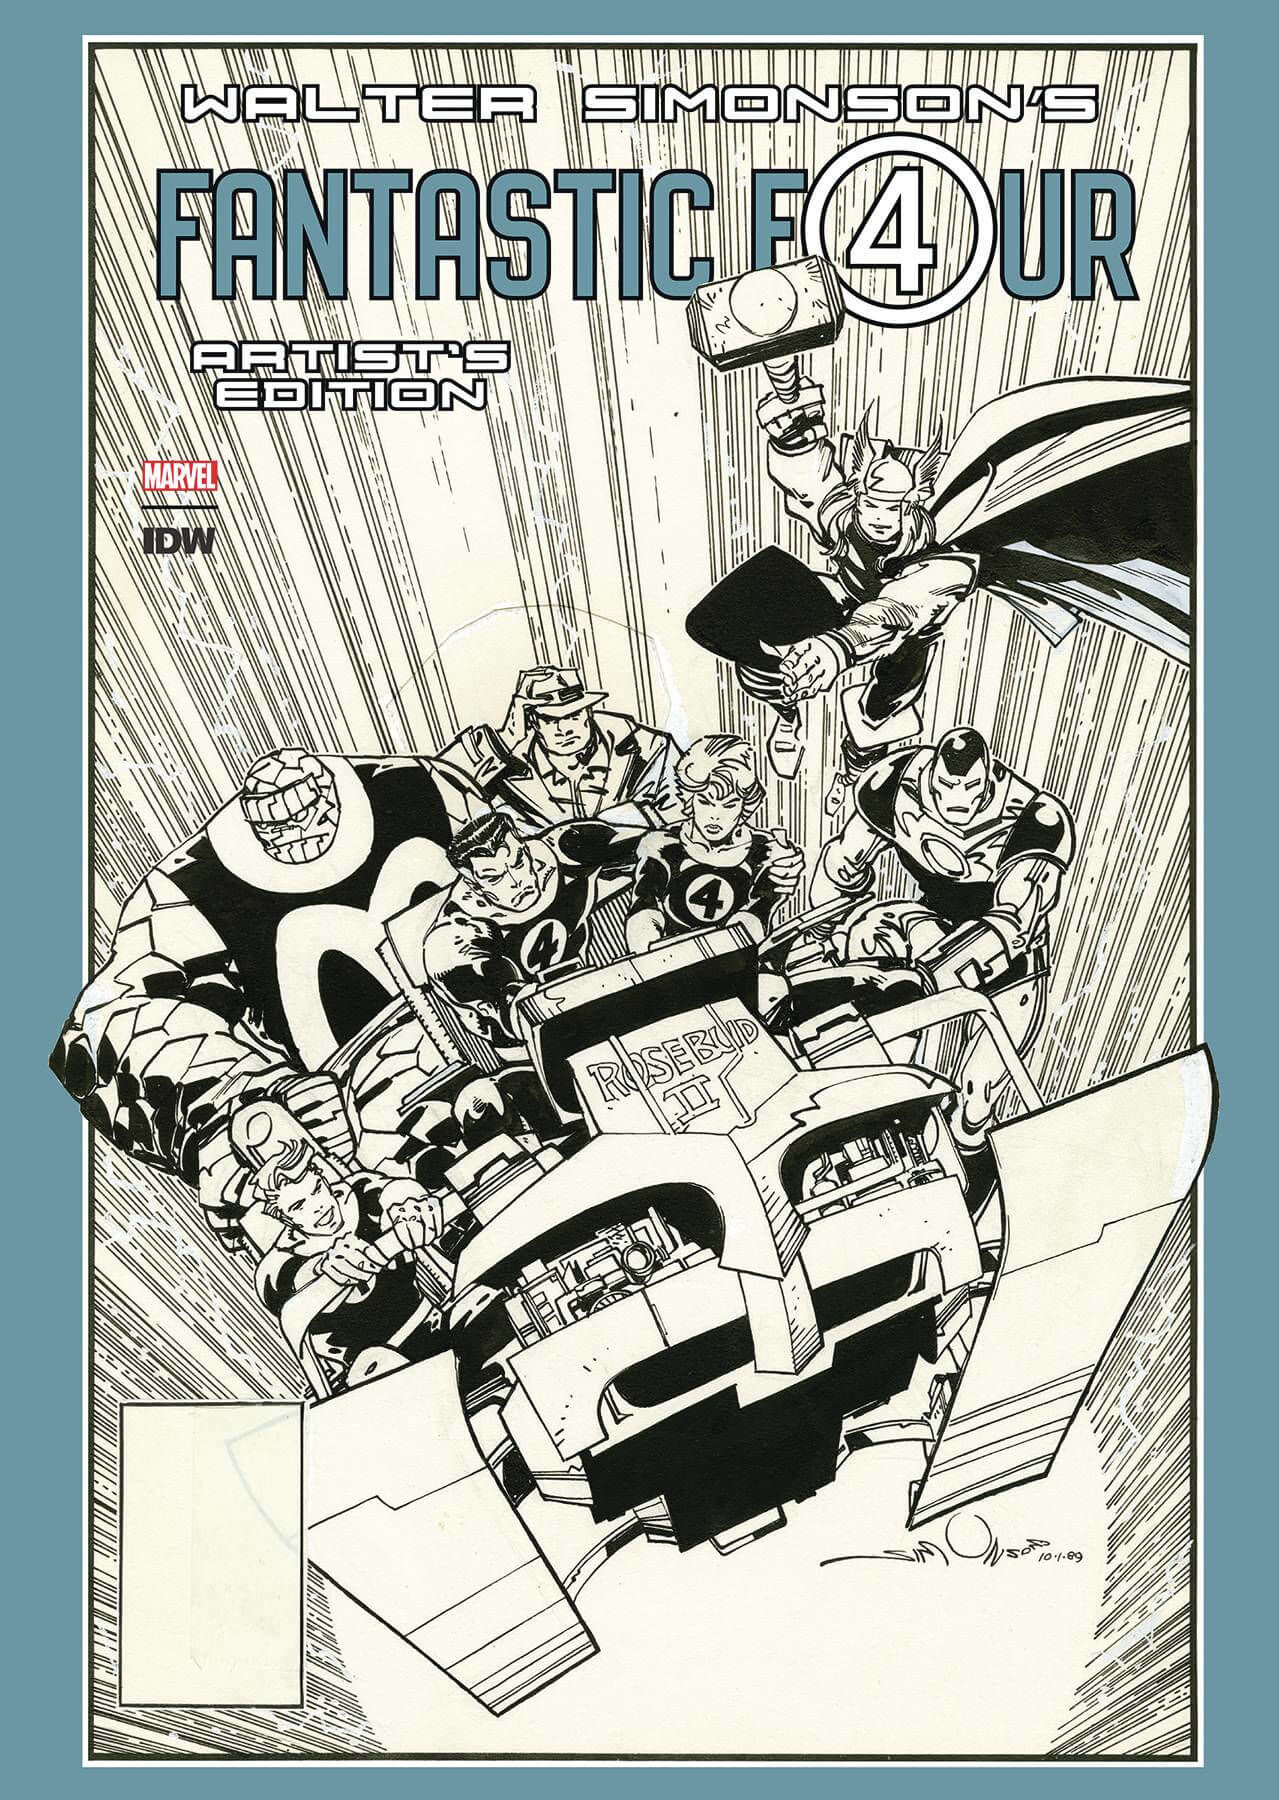 Walter Simonsons Fantastic Four Artists Edition cover prelim